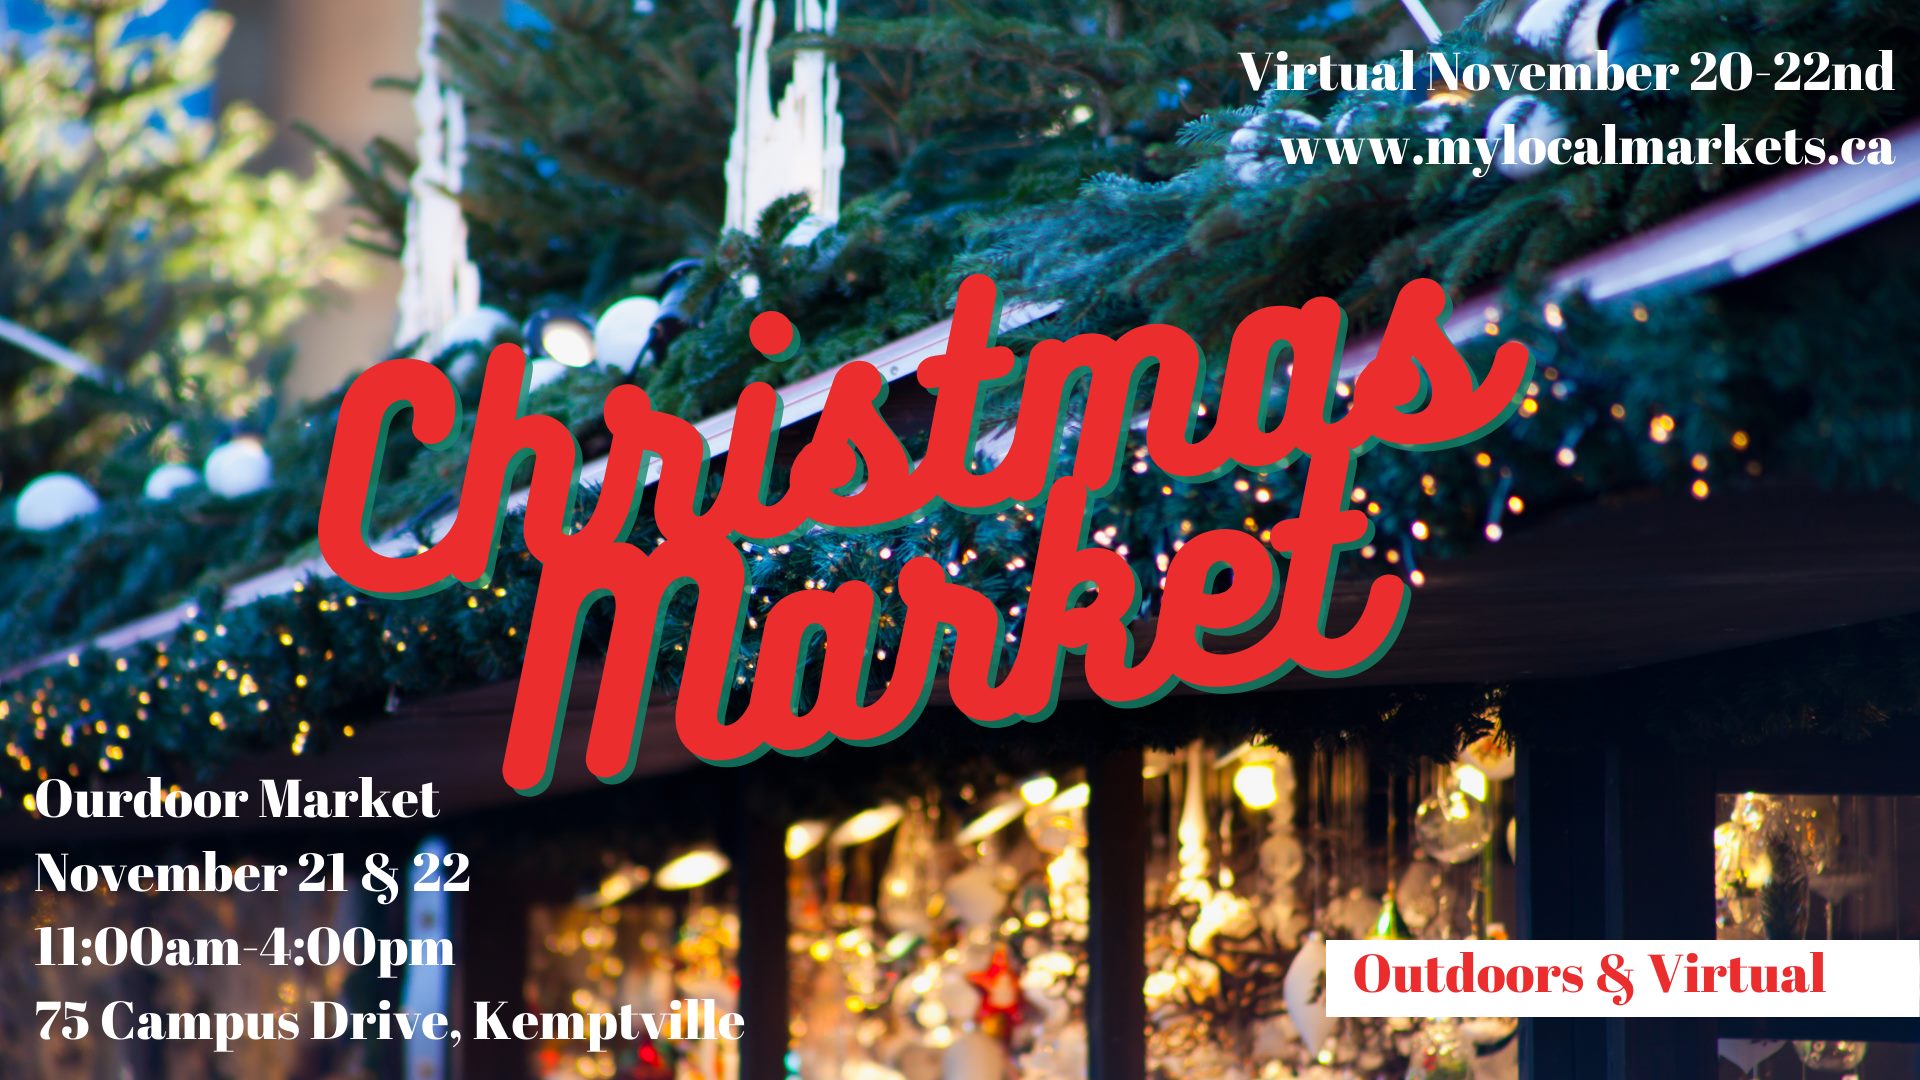 My Local Market Outdoor Christmas Market